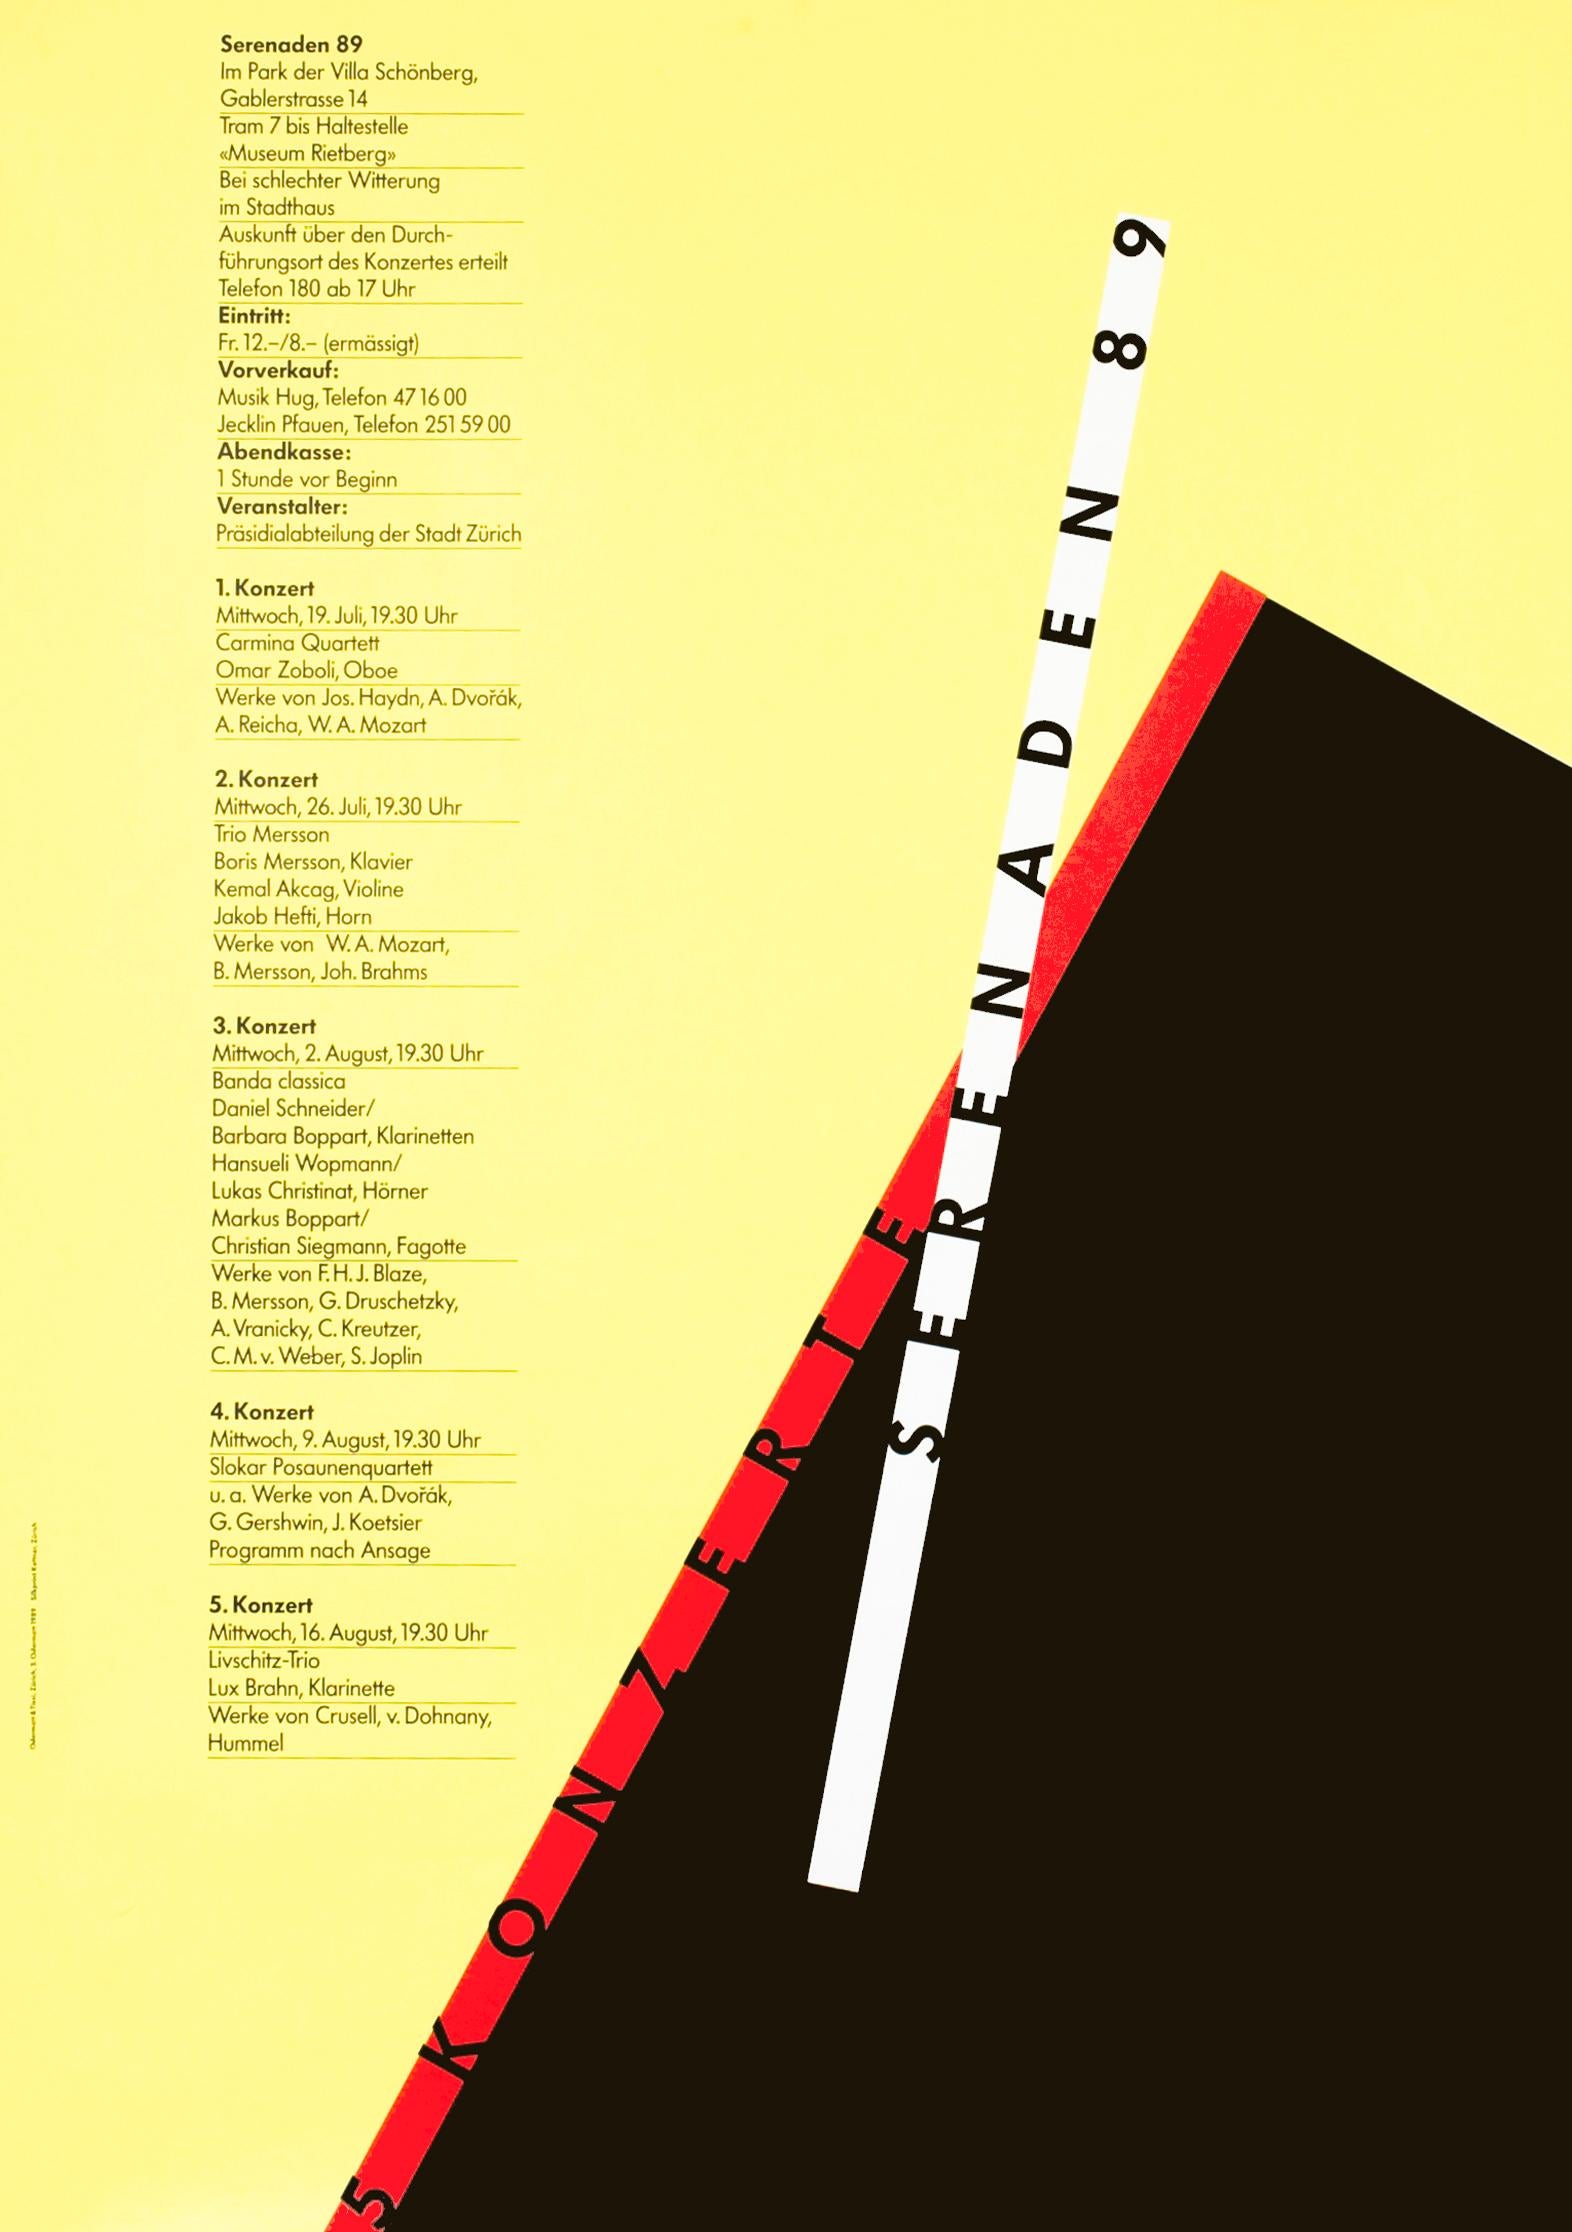 "Serenaden 89" Swiss Post Modern Music Festival Original Vintage Poster - Print by Siegfried Odermatt